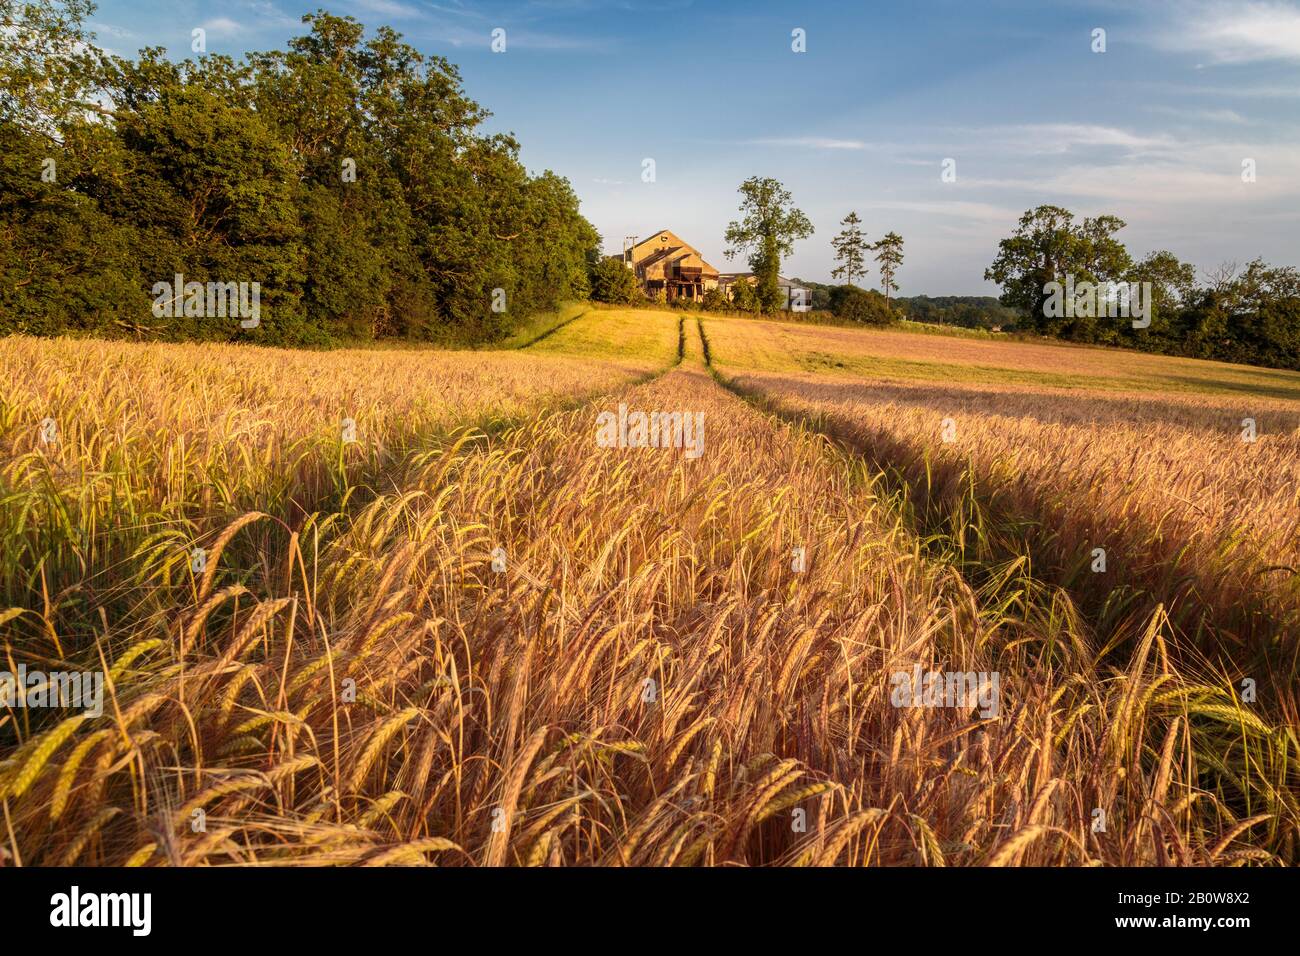 A golden wheat field in the heart of summer, broad & fertile. Stock Photo